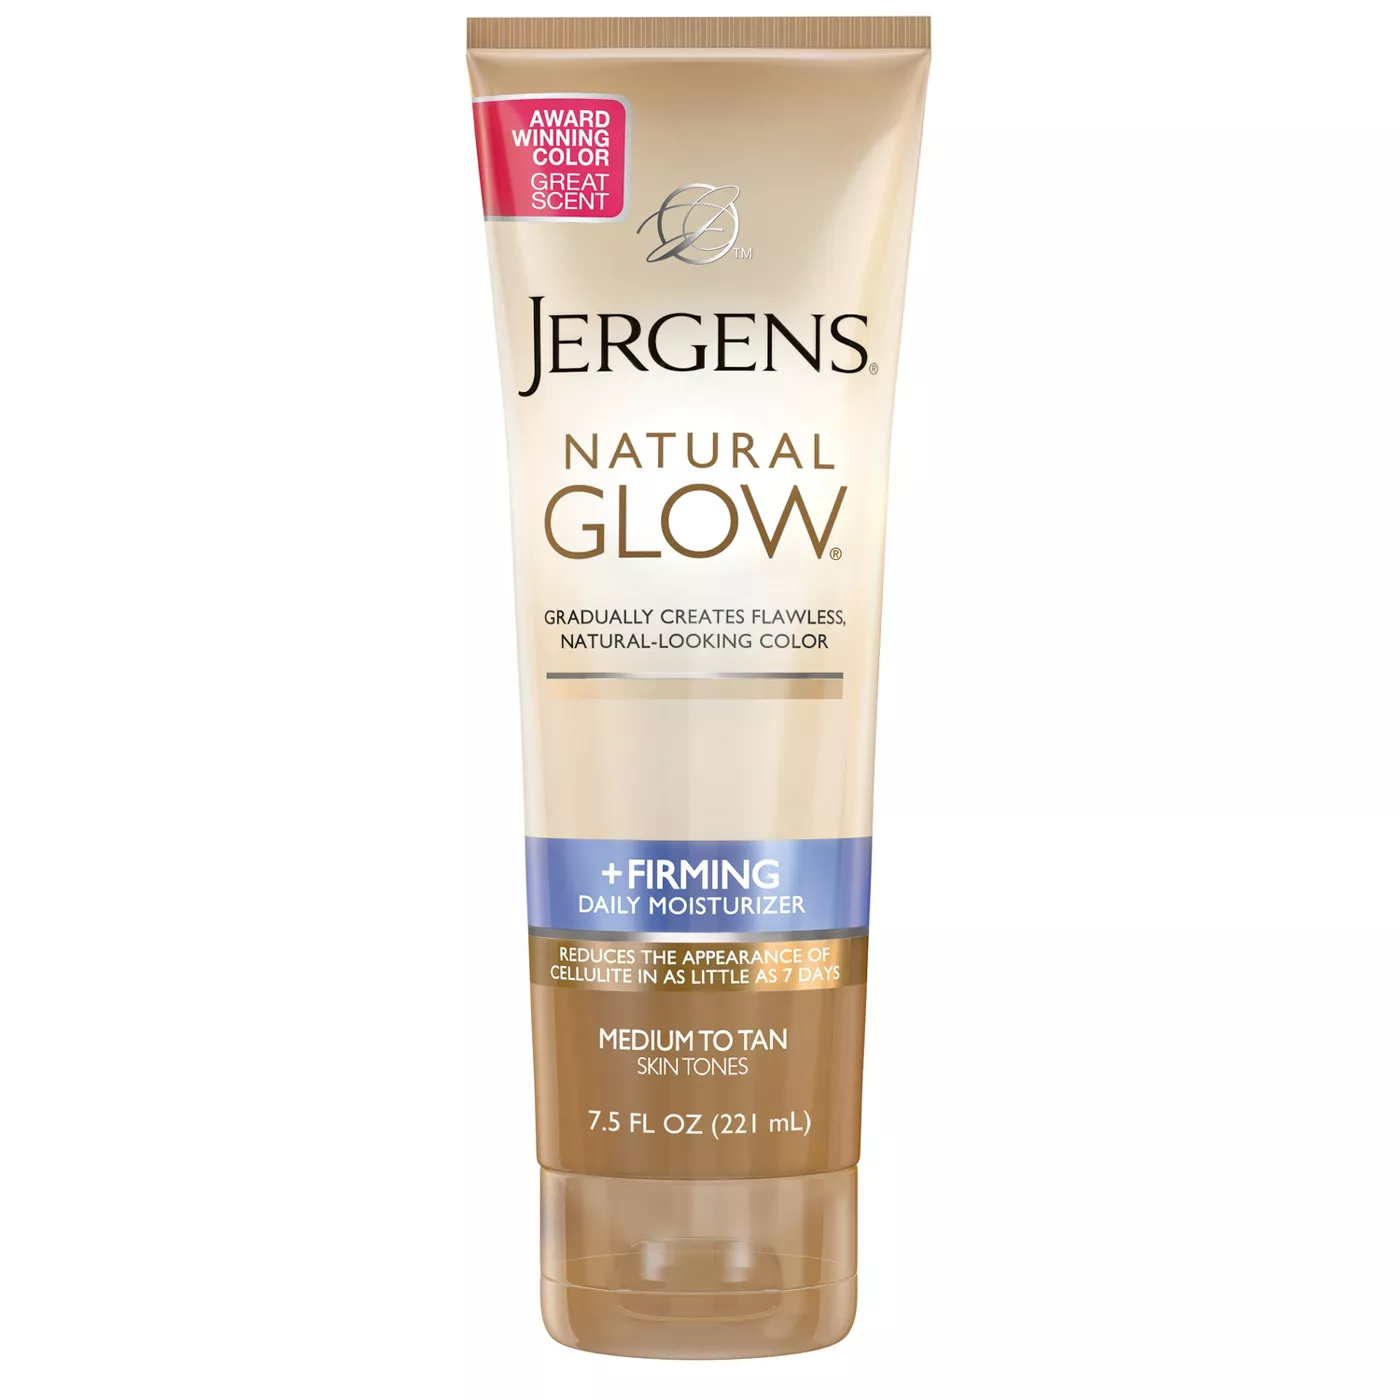 Jergens Natural Glow Firming Daily Moisturizer, Medium to Ta